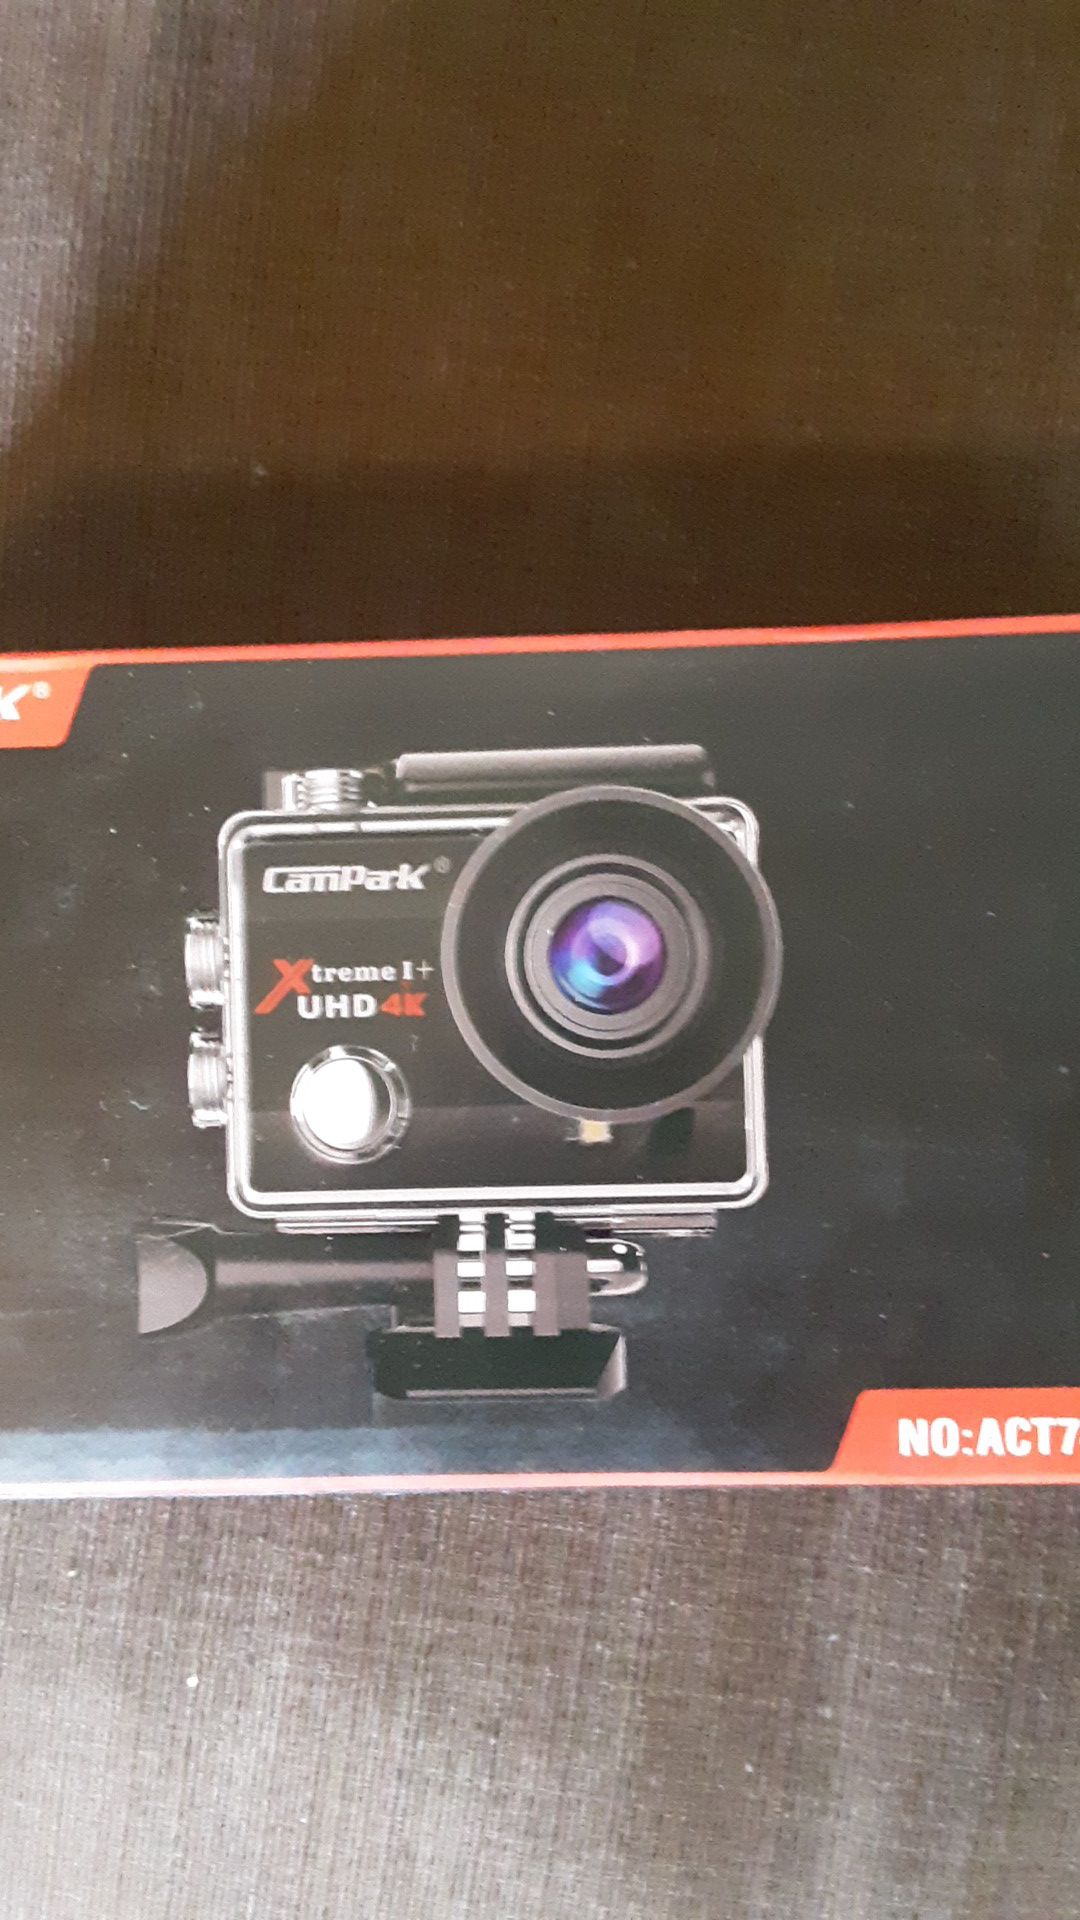 Canpak 4k action camera